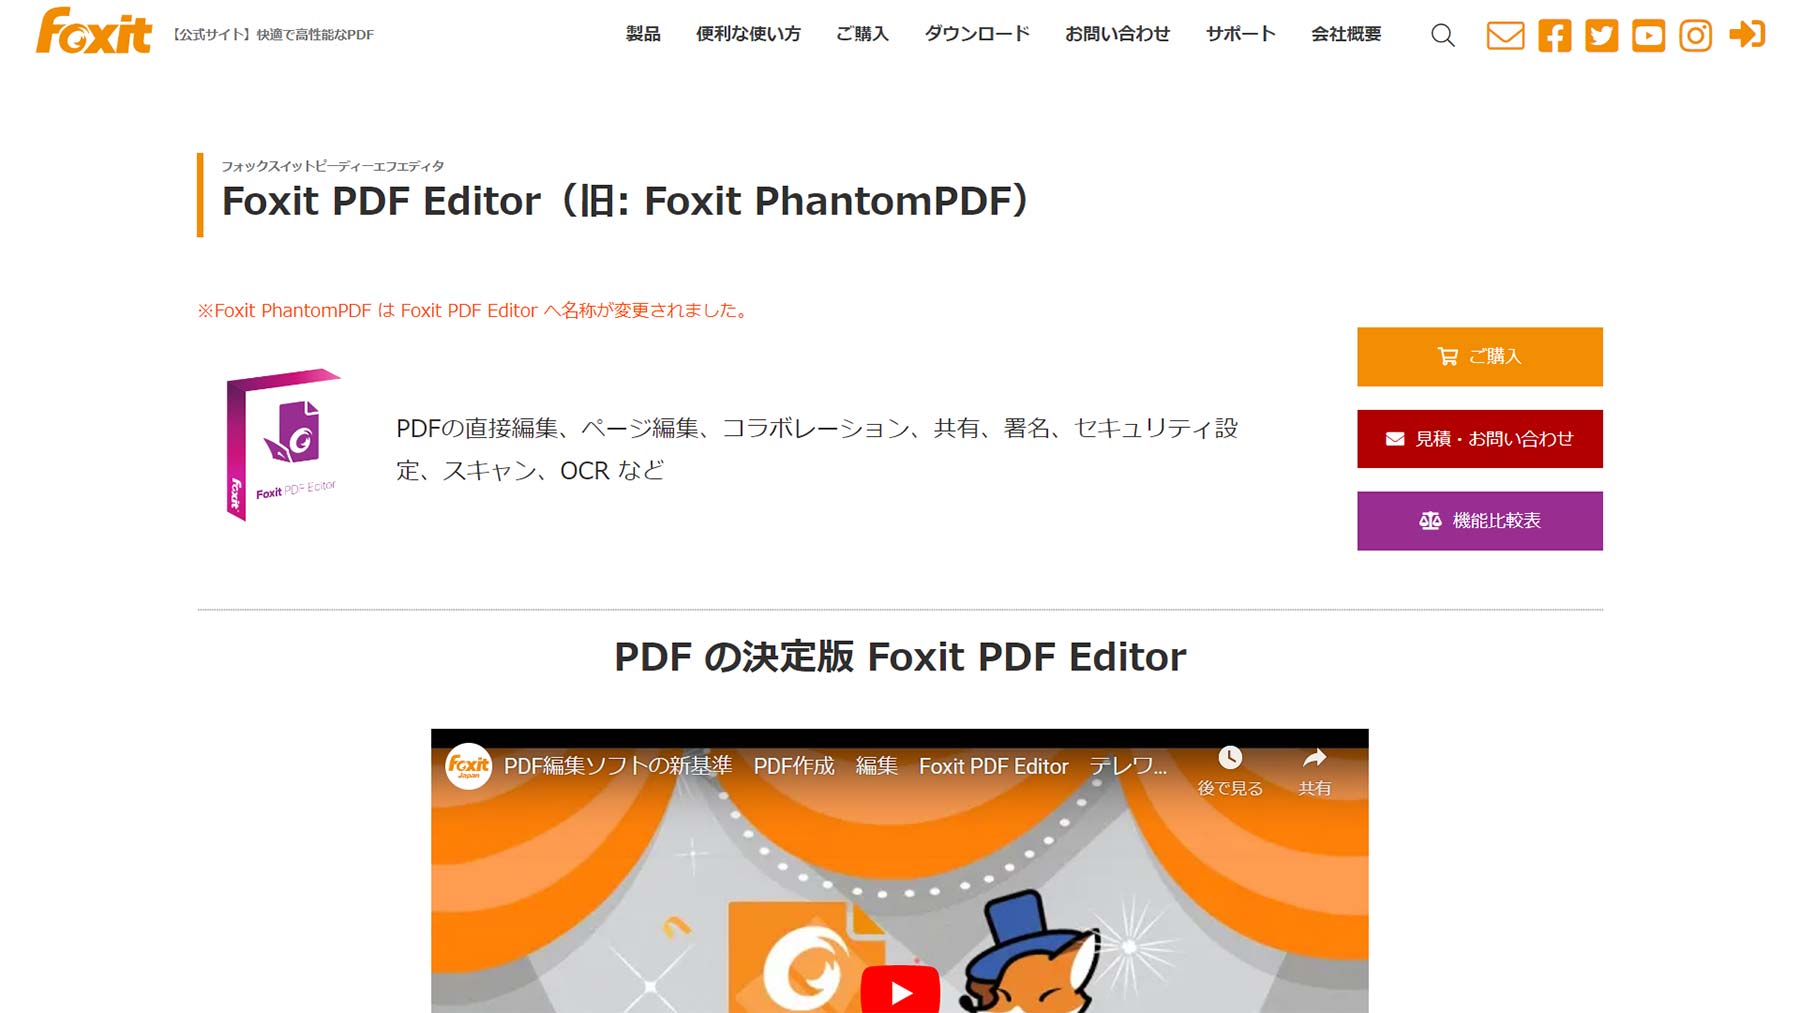 Foxit PDF Editor公式Webサイト